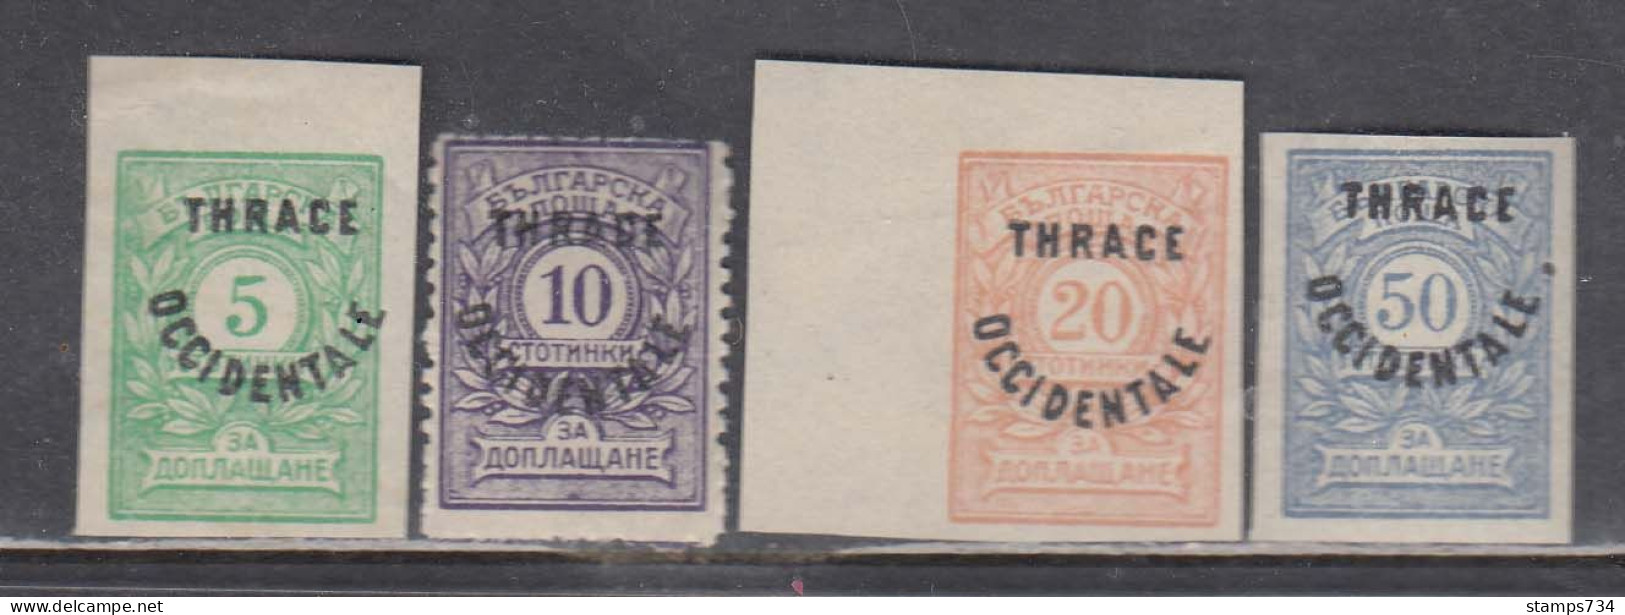 Thrace 1920 - Porto, Marken Mit Aufdruck "Thrace Occidentale", Mi-nr. Porto 4, 5A, 6, 7, MNH - Thrakien